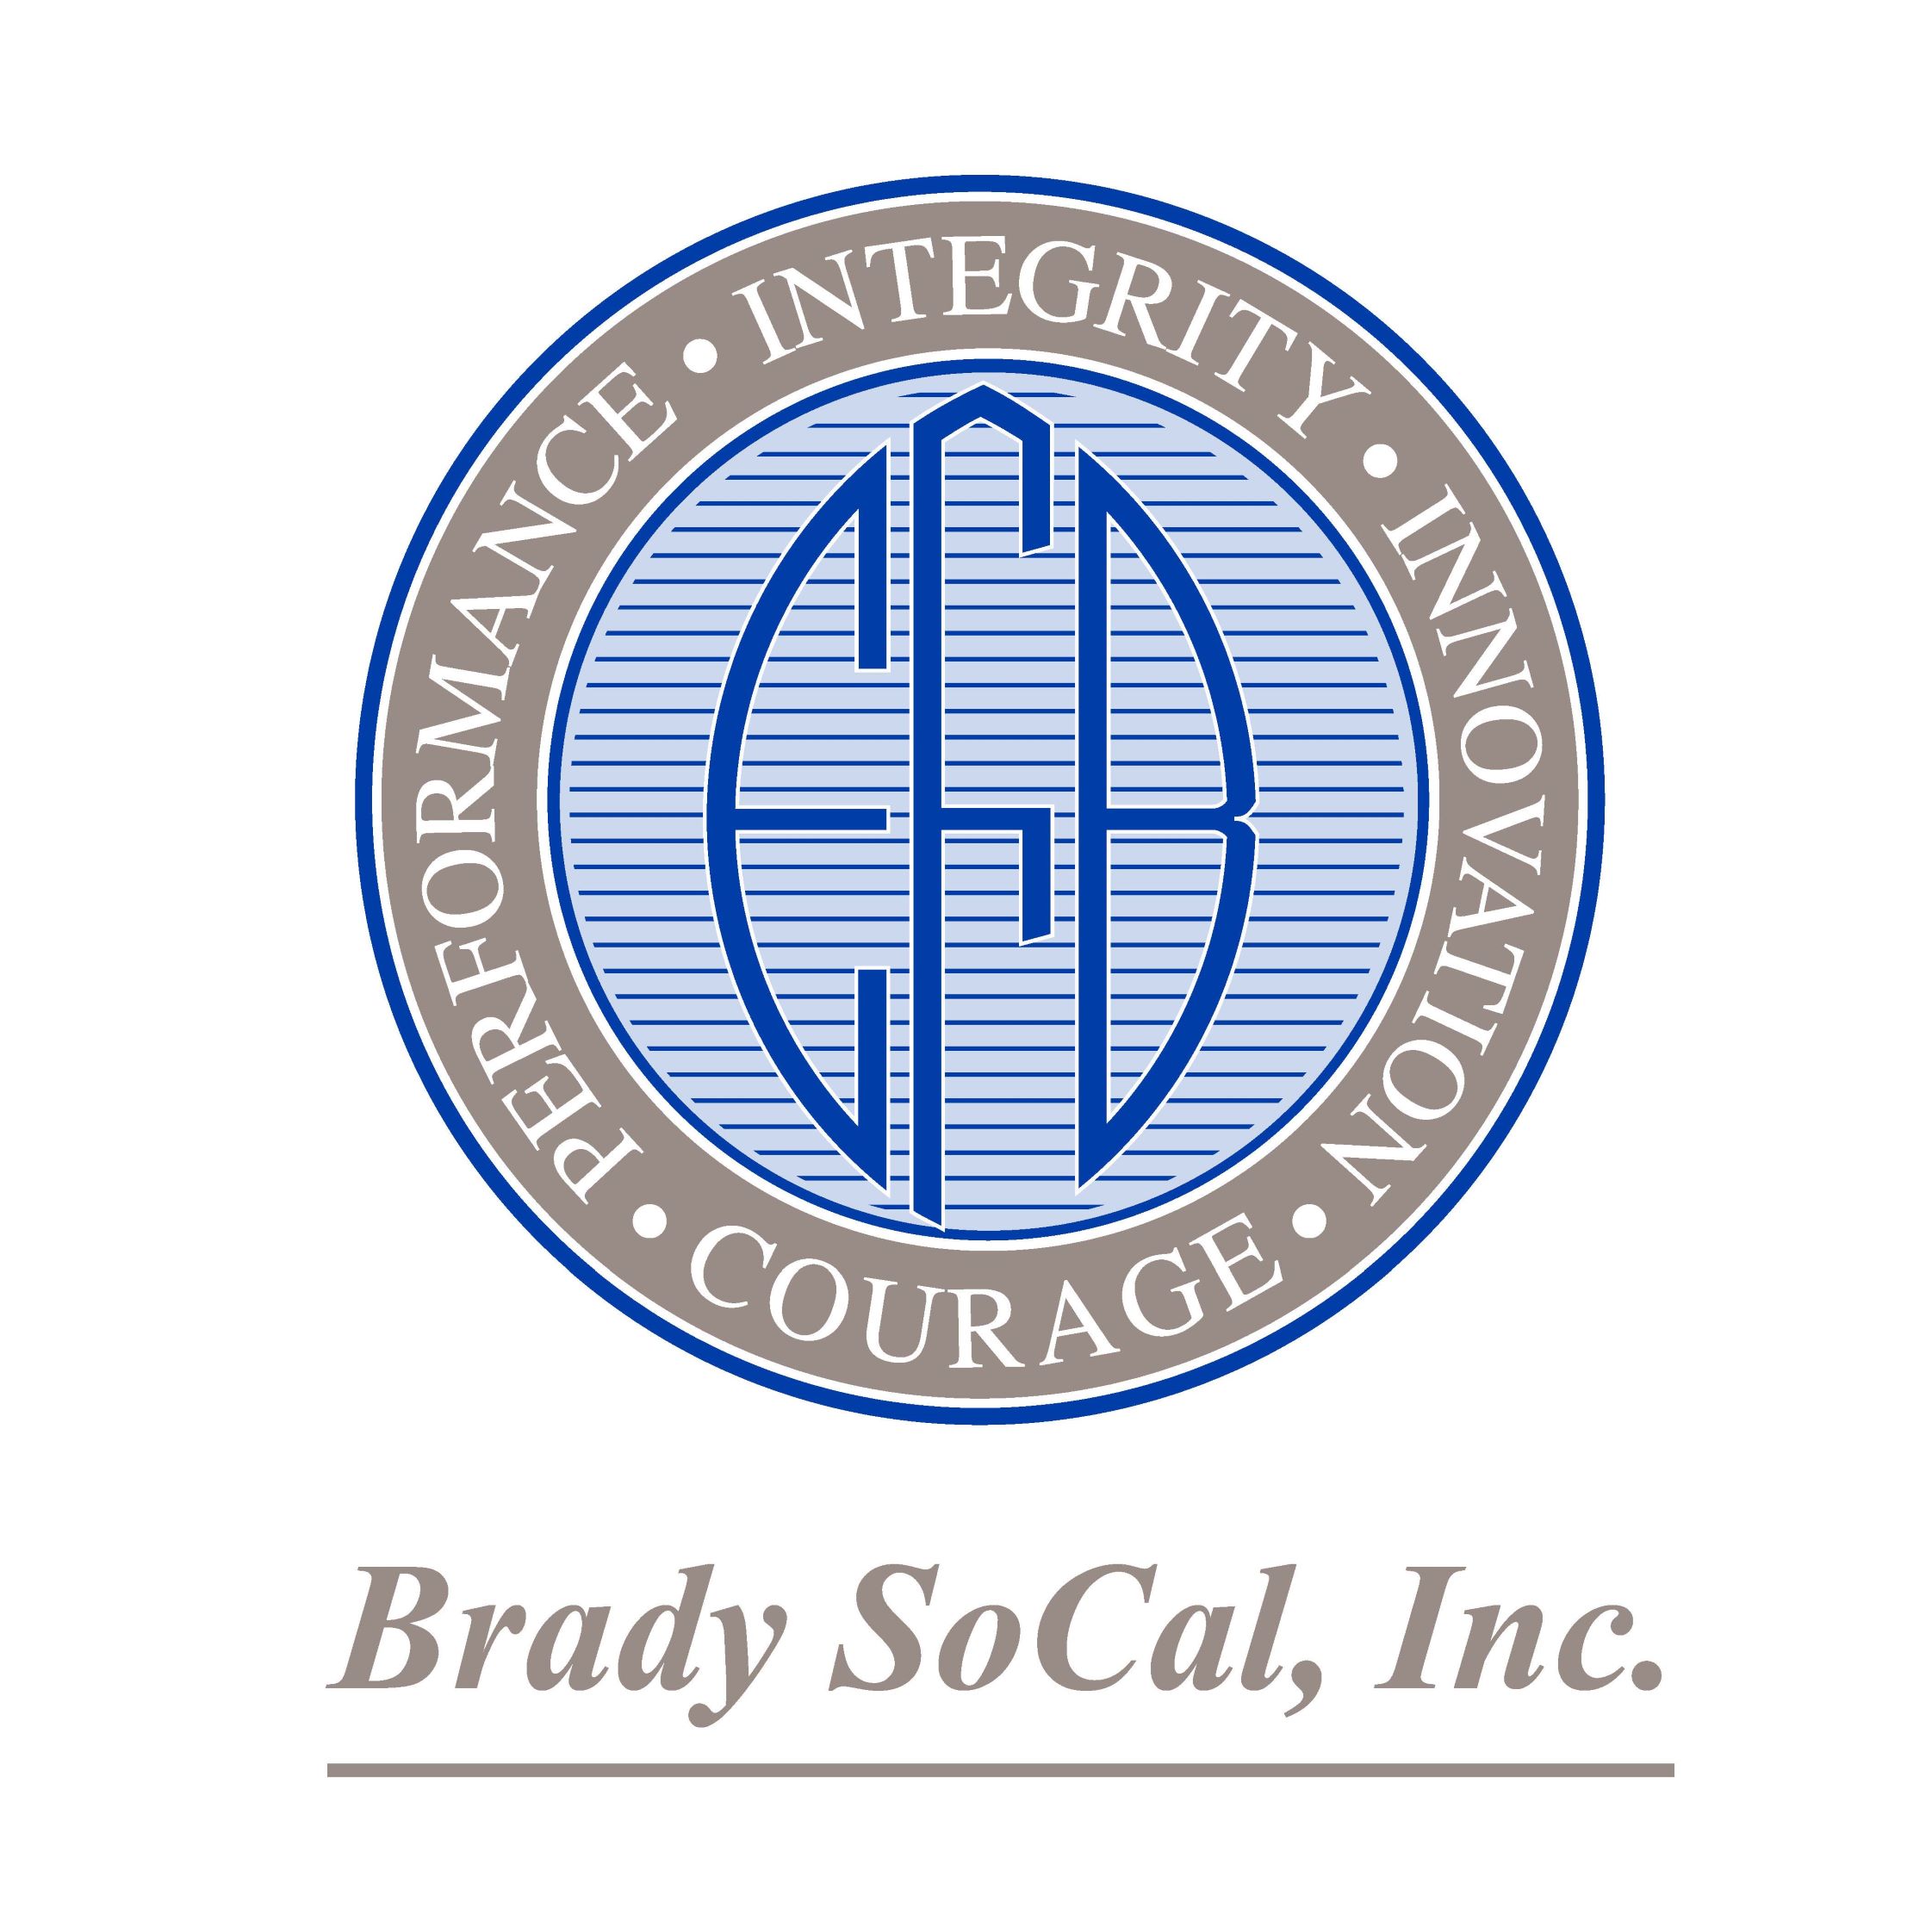 A logo of brady socal, inc.